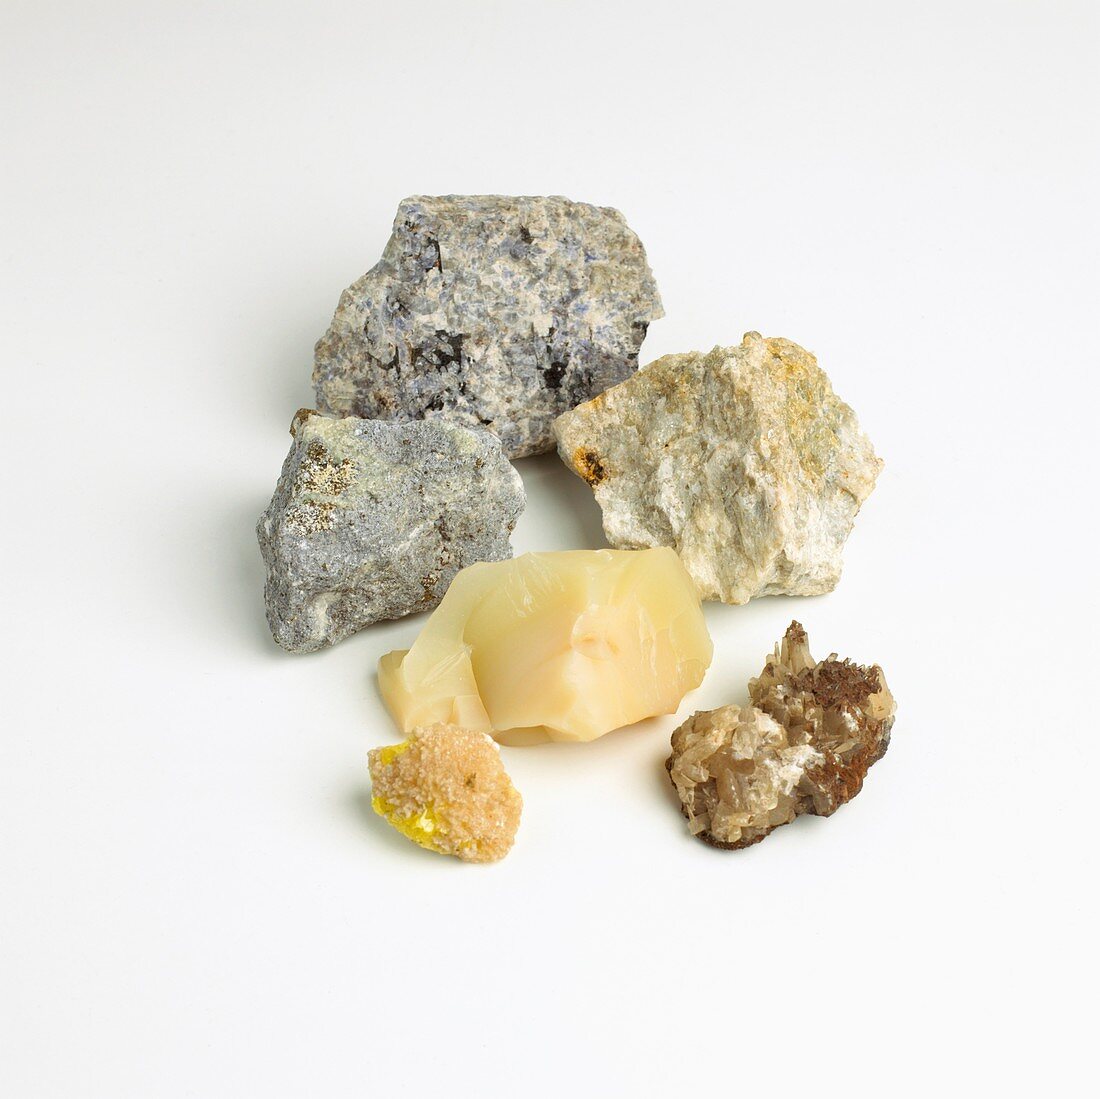 Mineral samples